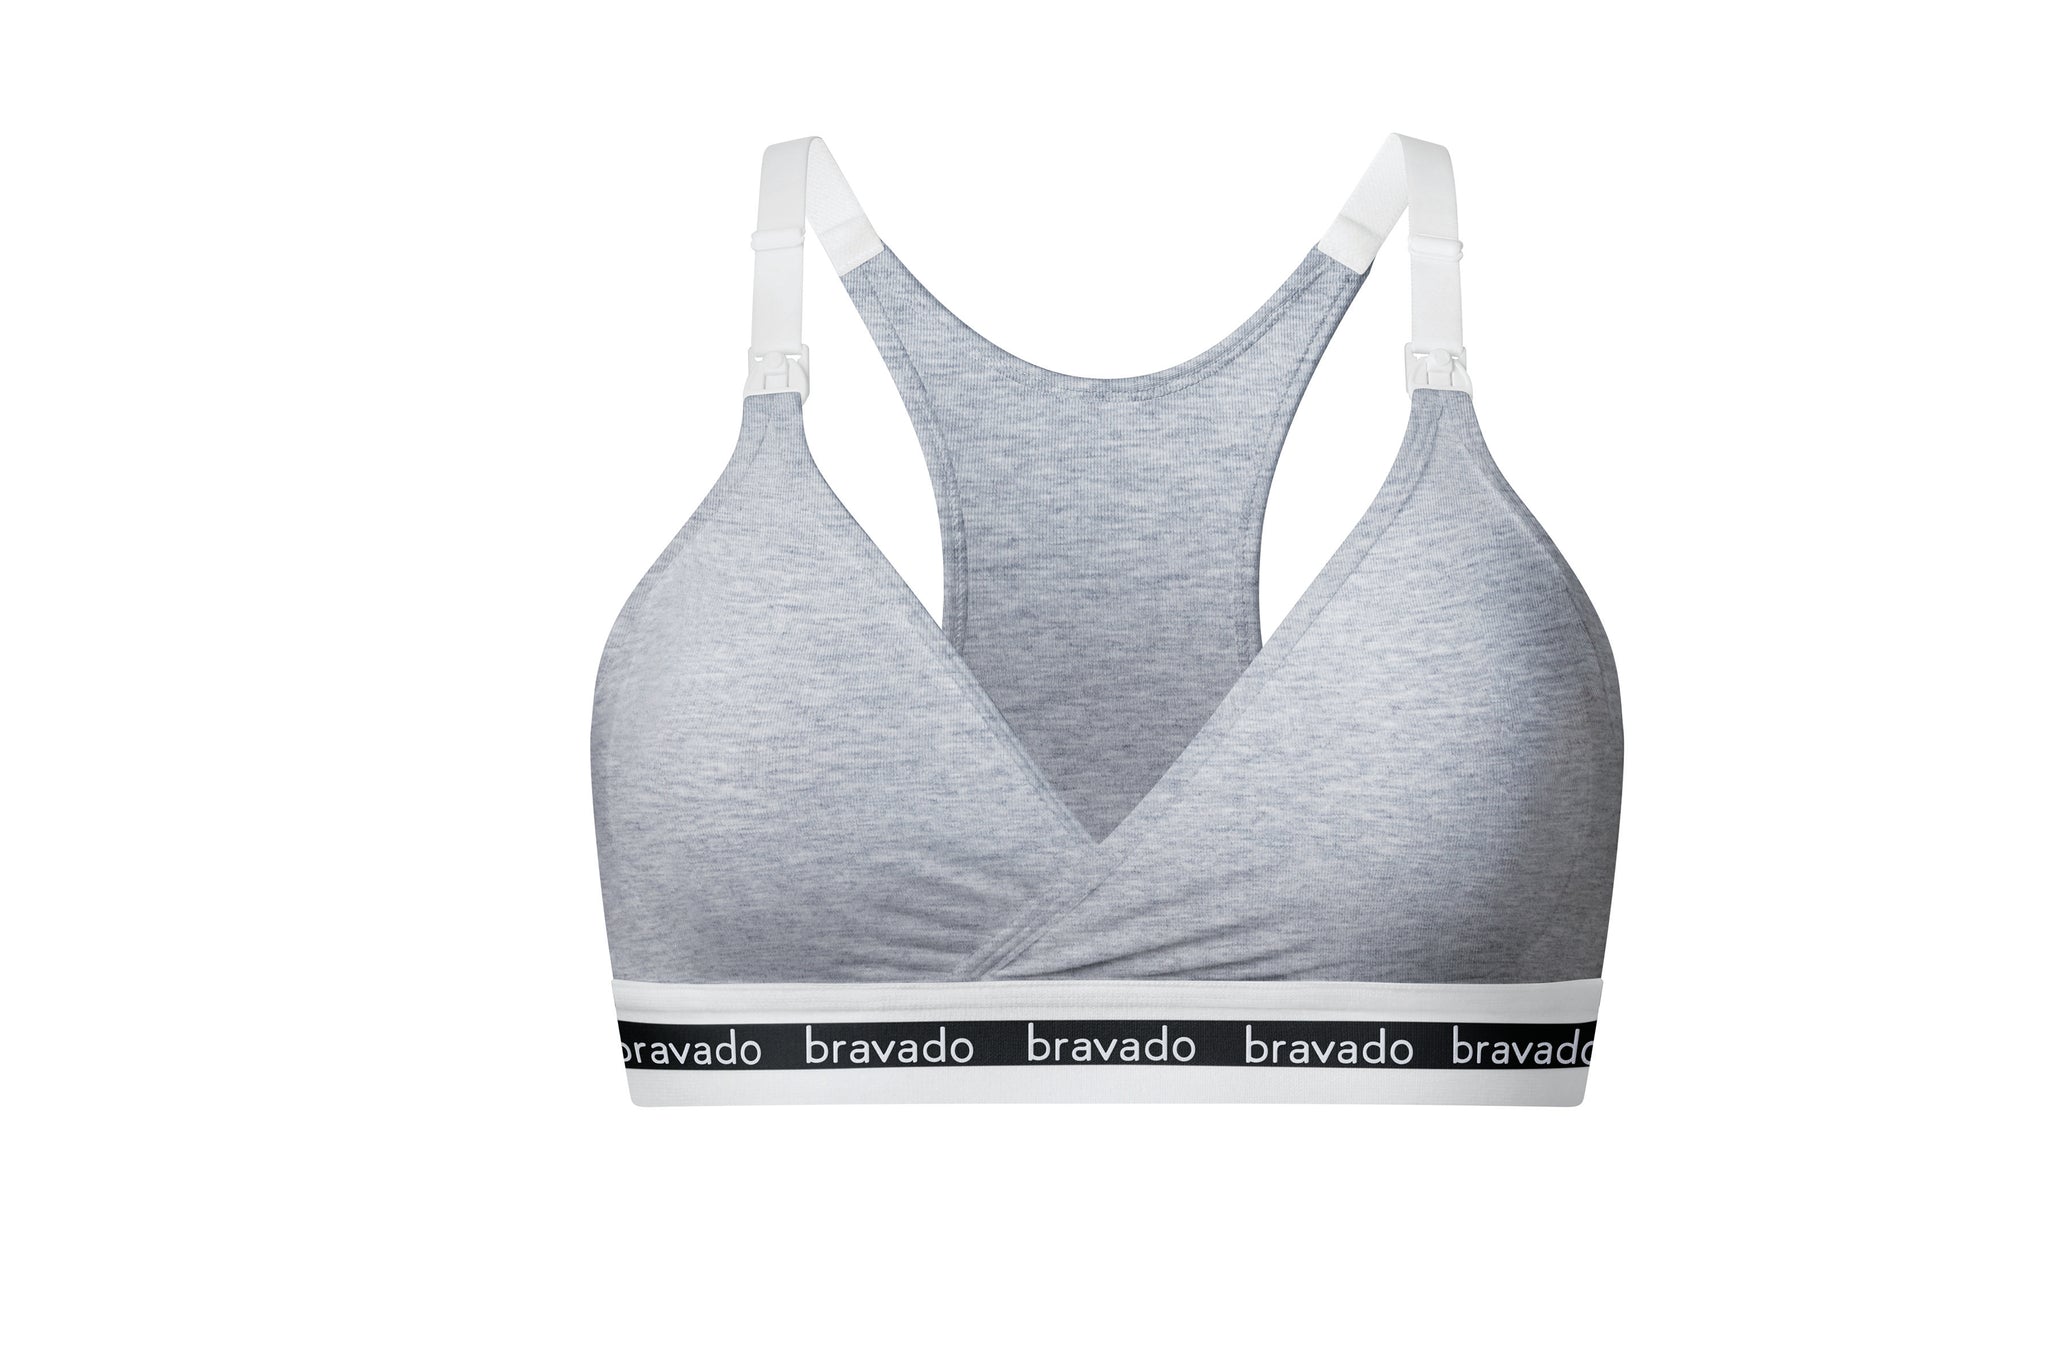 Buy BRAVADO! DESIGNS Original Nursing Sleep Bra in Cotton-Modal, White